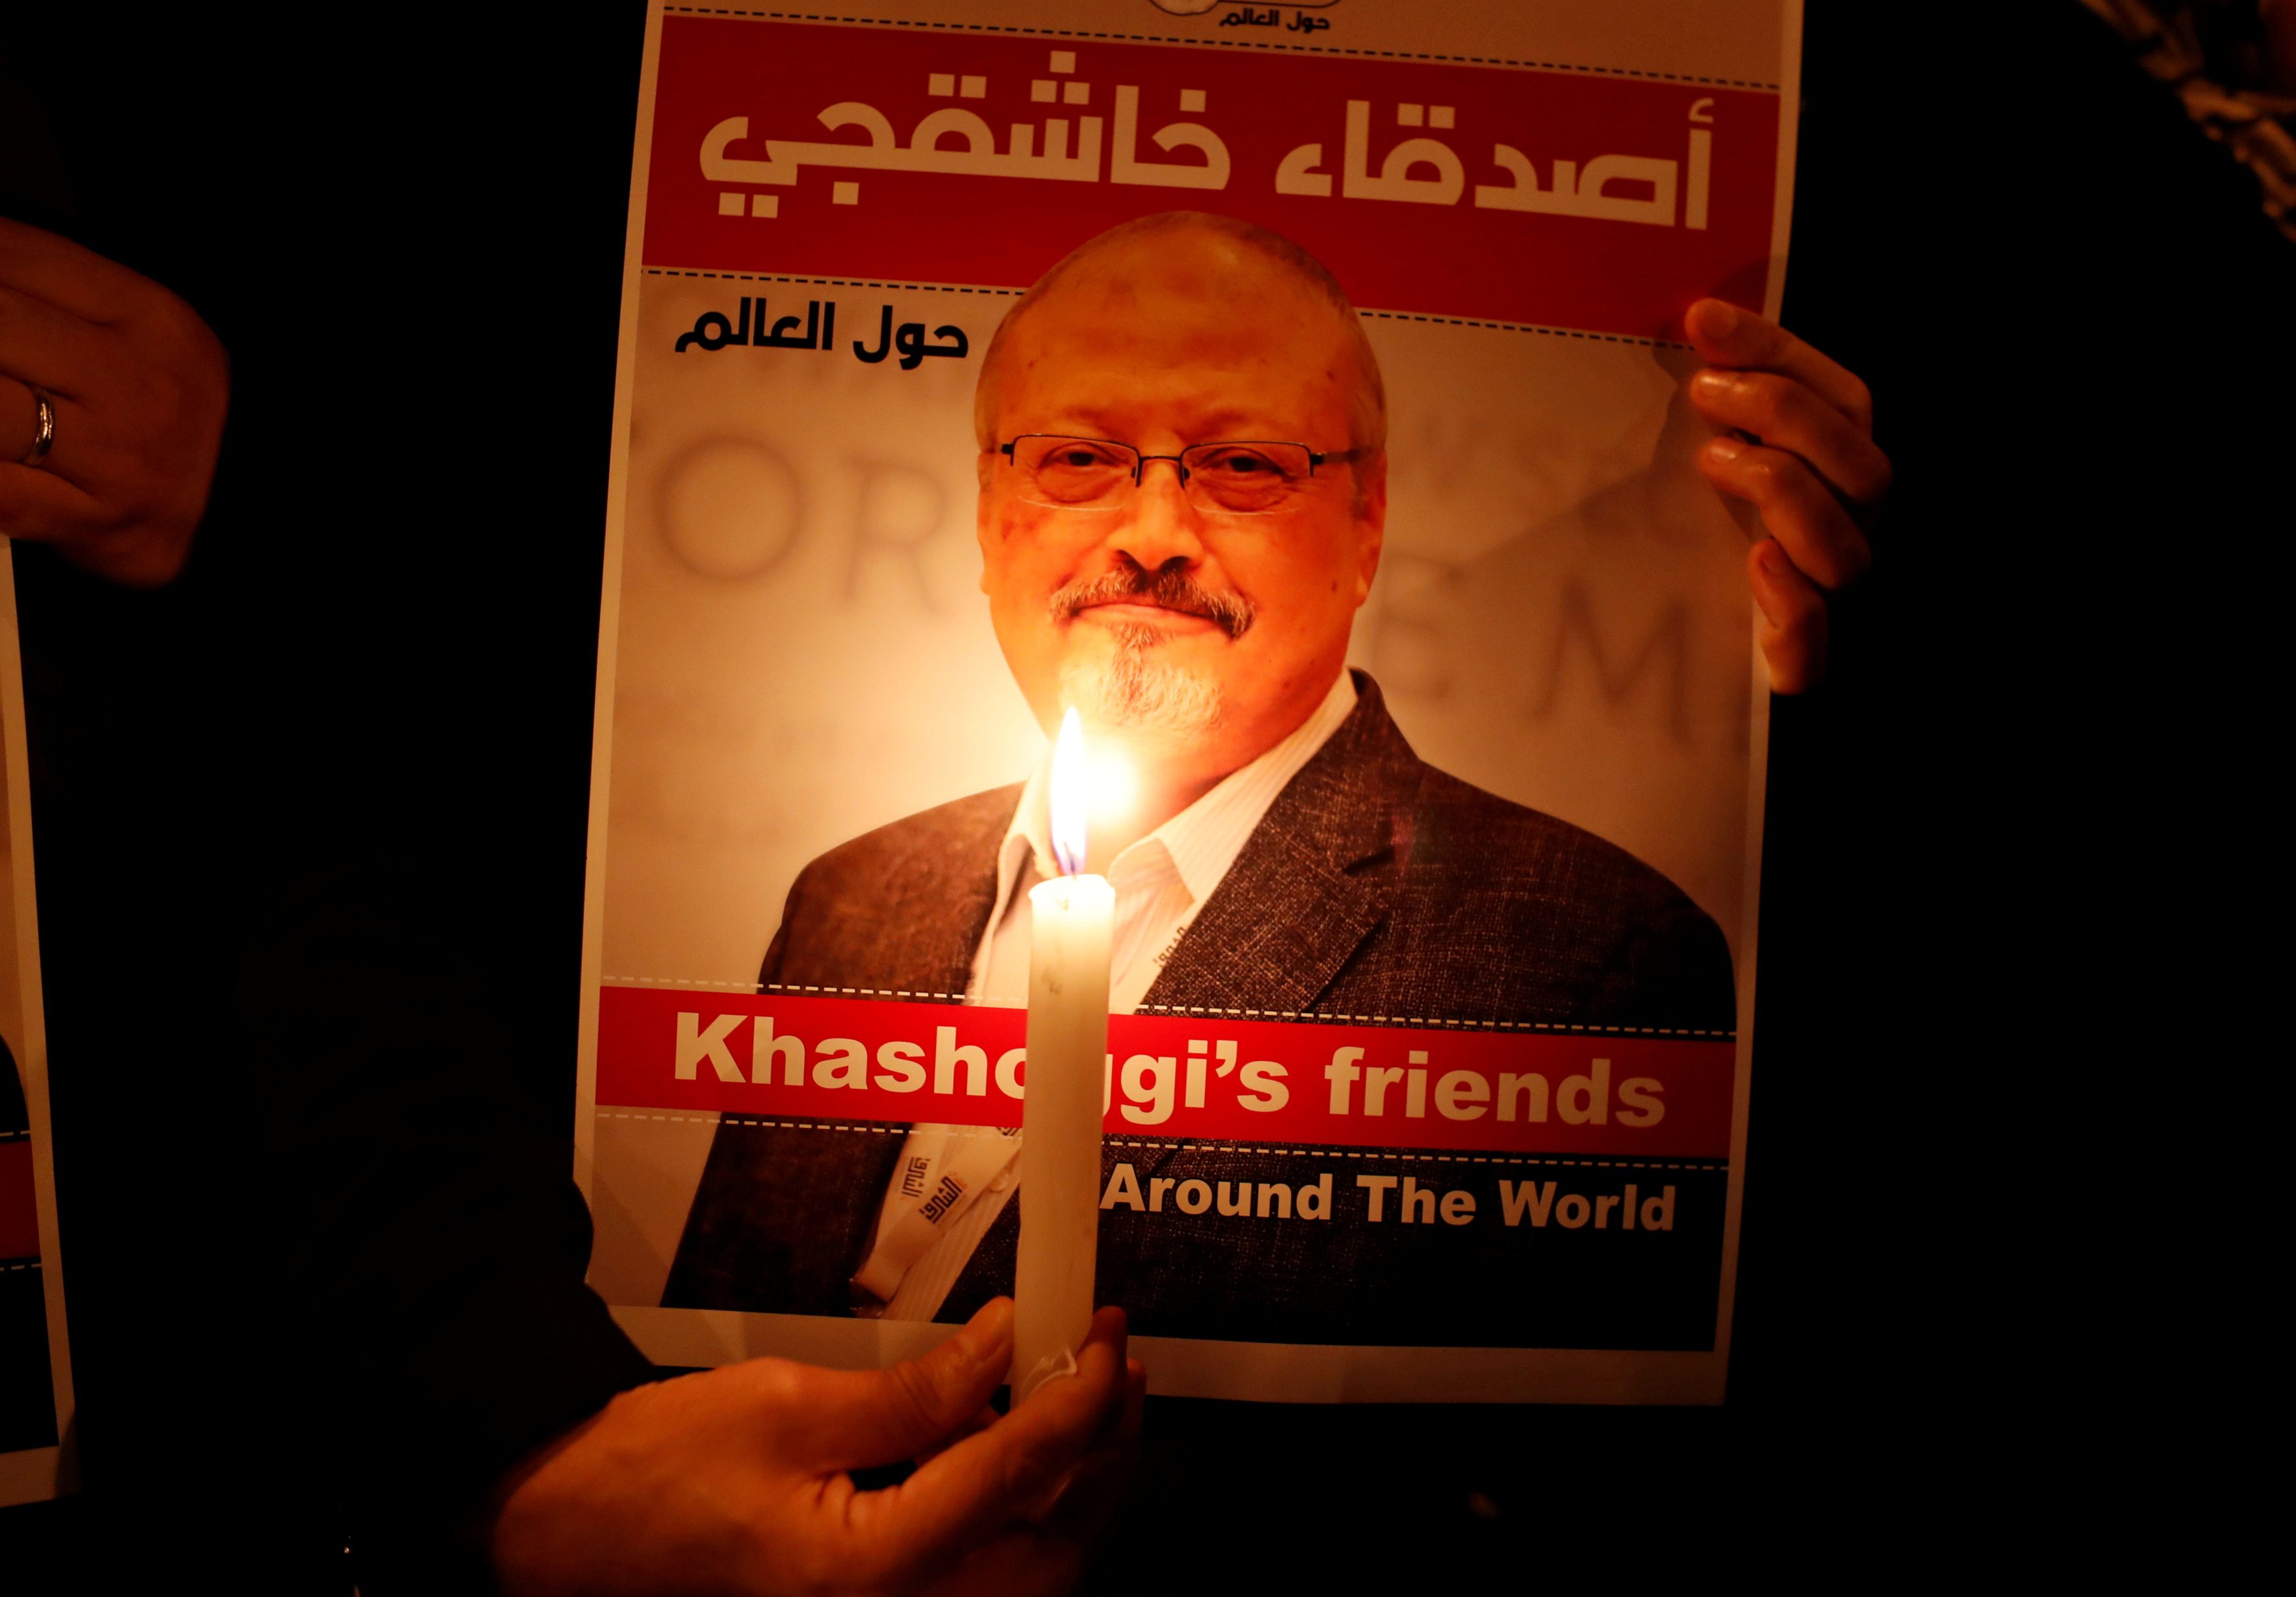 A suspected killer of Saudi journalist Khashoggi held in France – sources